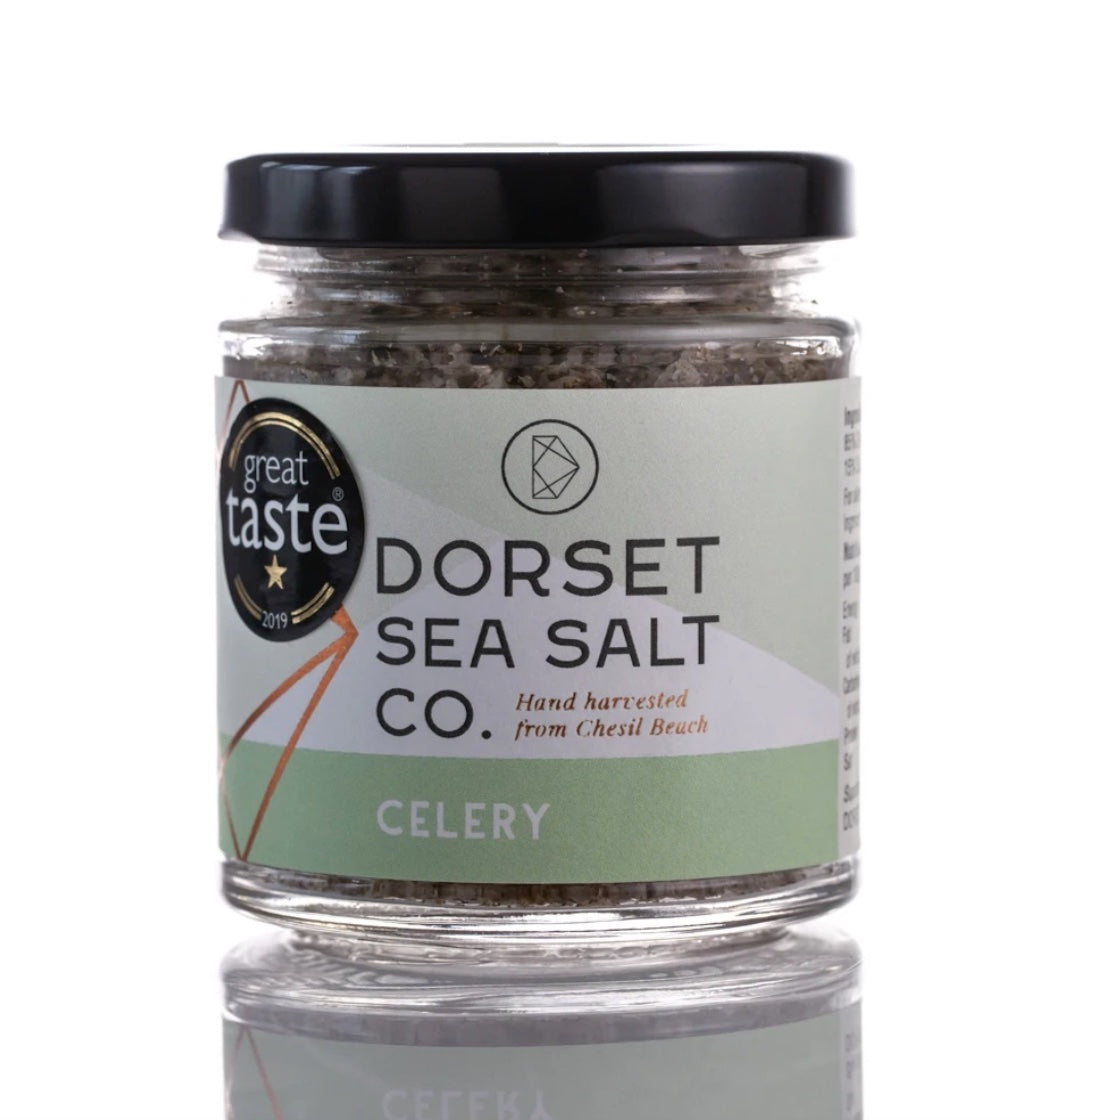 Celery infused Dorset Sea Salt - 100 gr.